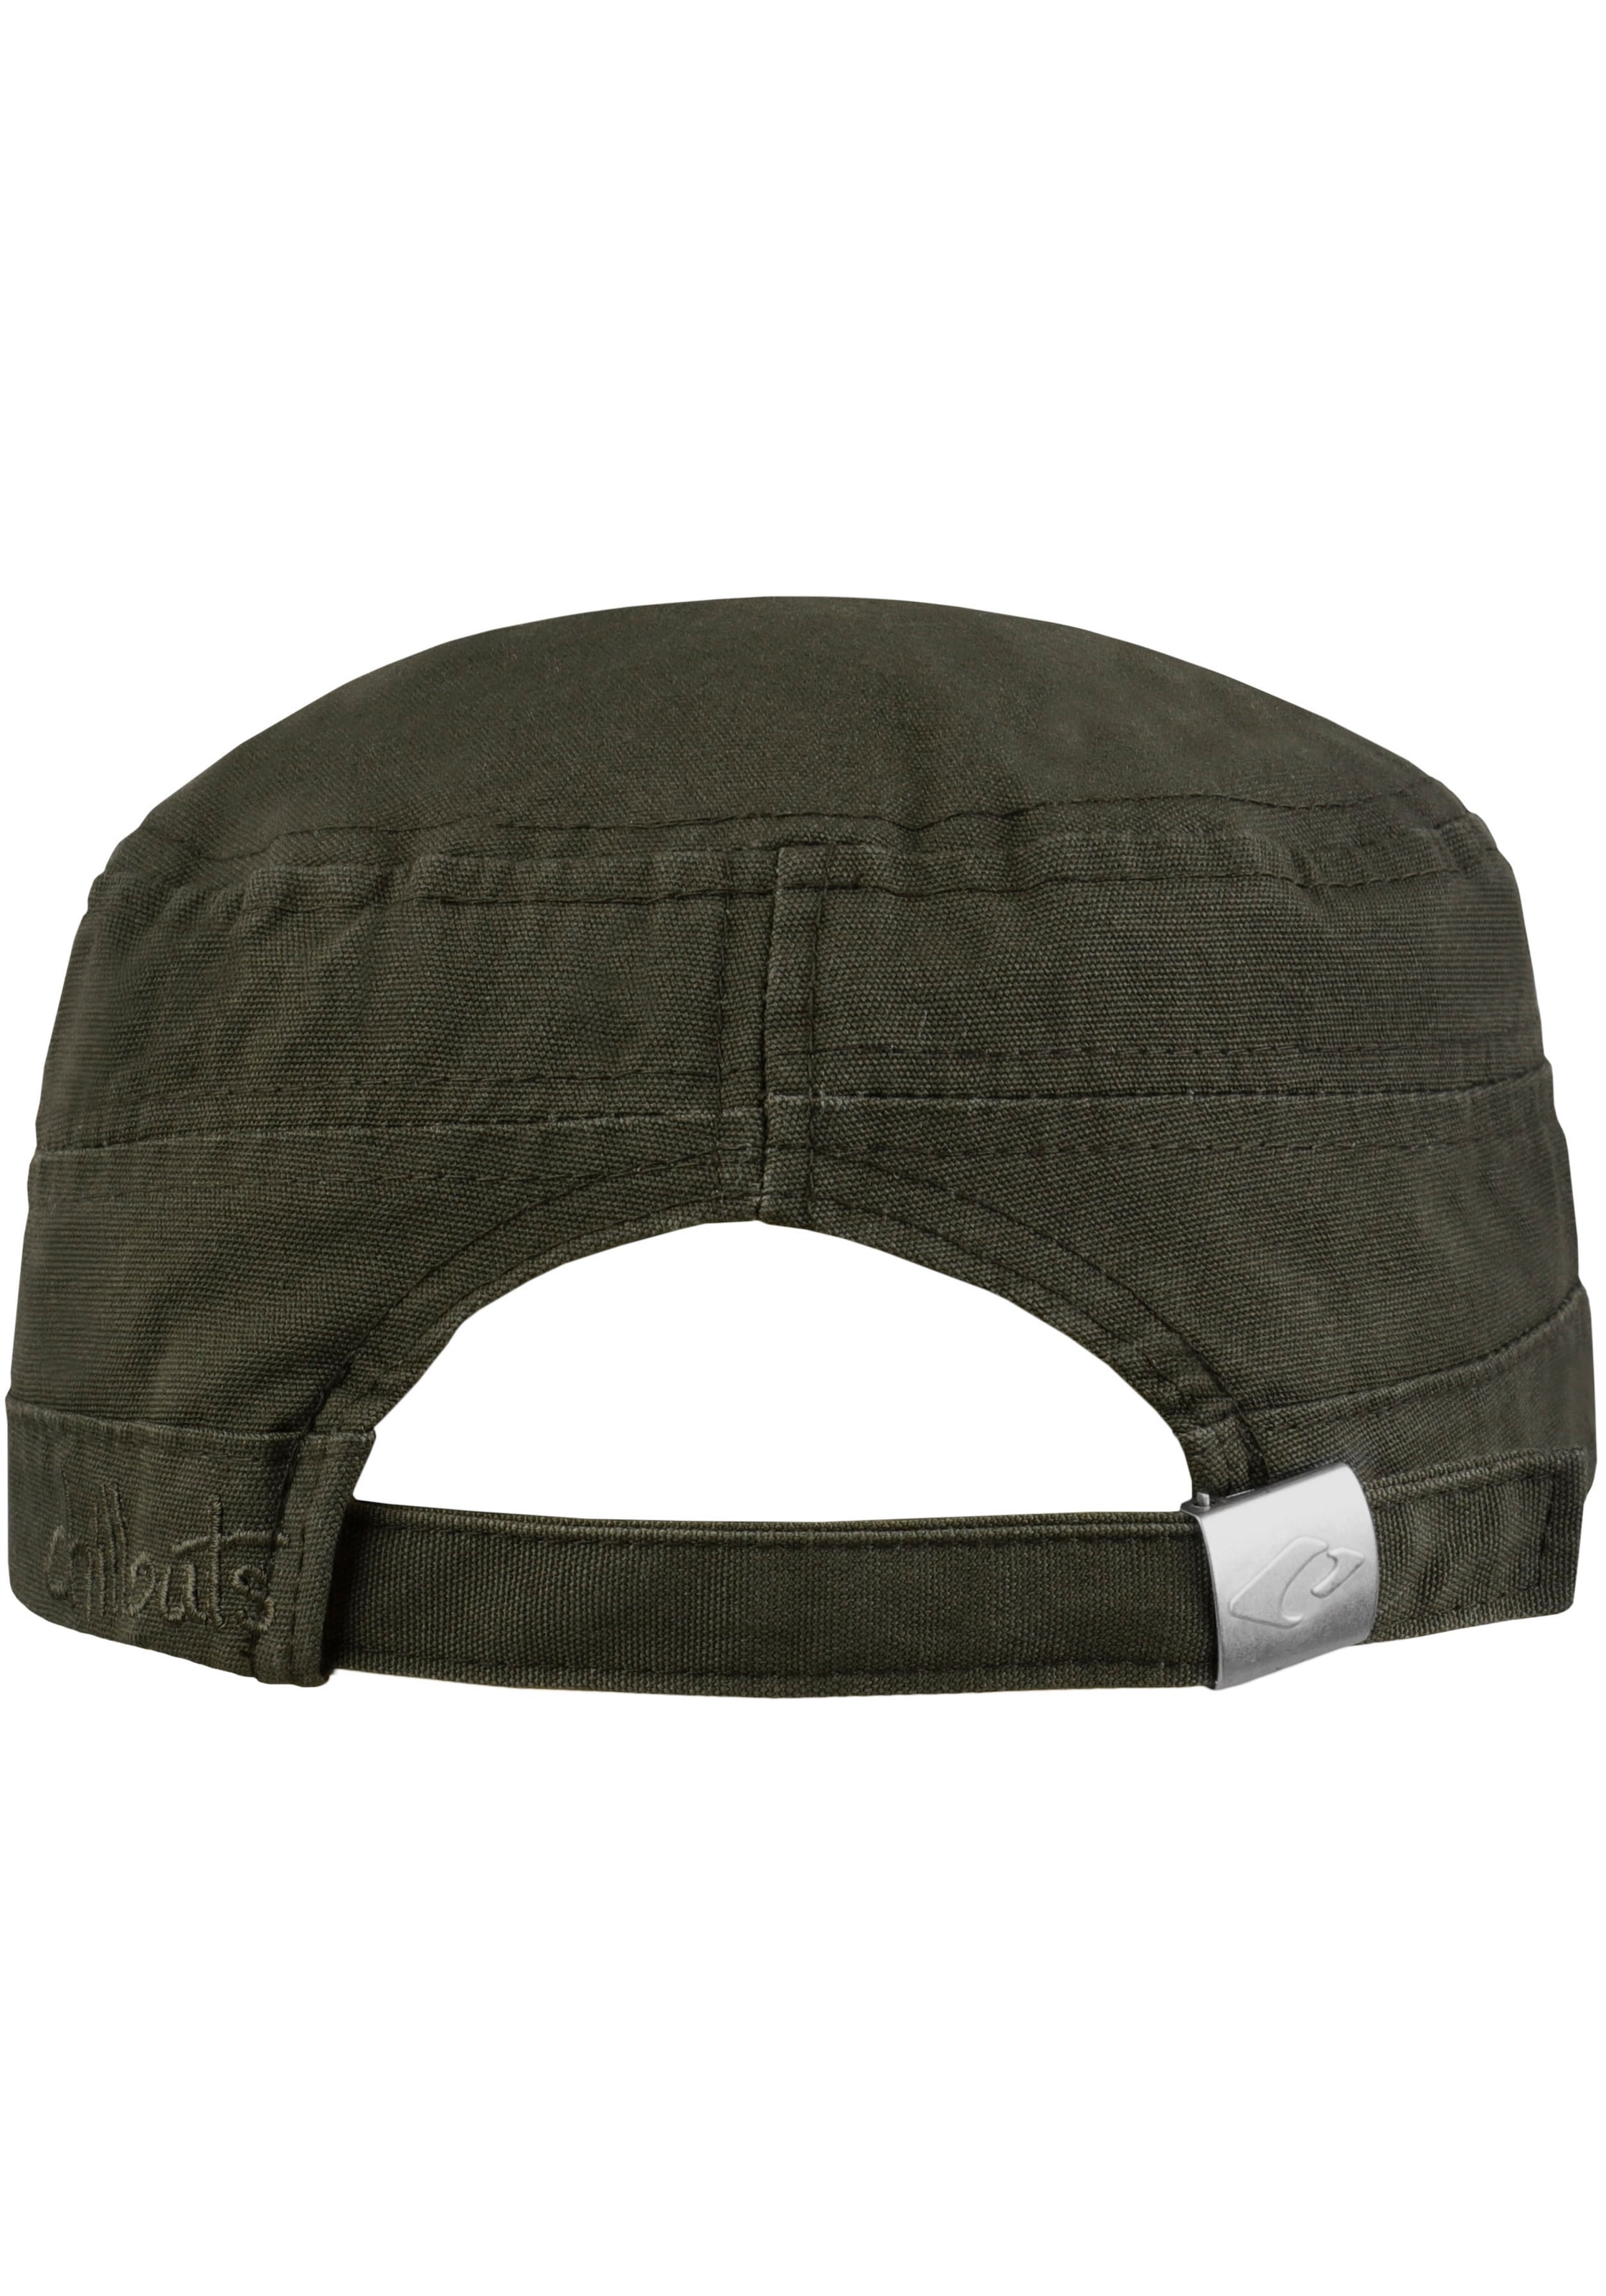 Paso Baumwolle, online Hat«, OTTO aus Army One chillouts Cap reiner Size »El shoppen atmungsaktiv, bei